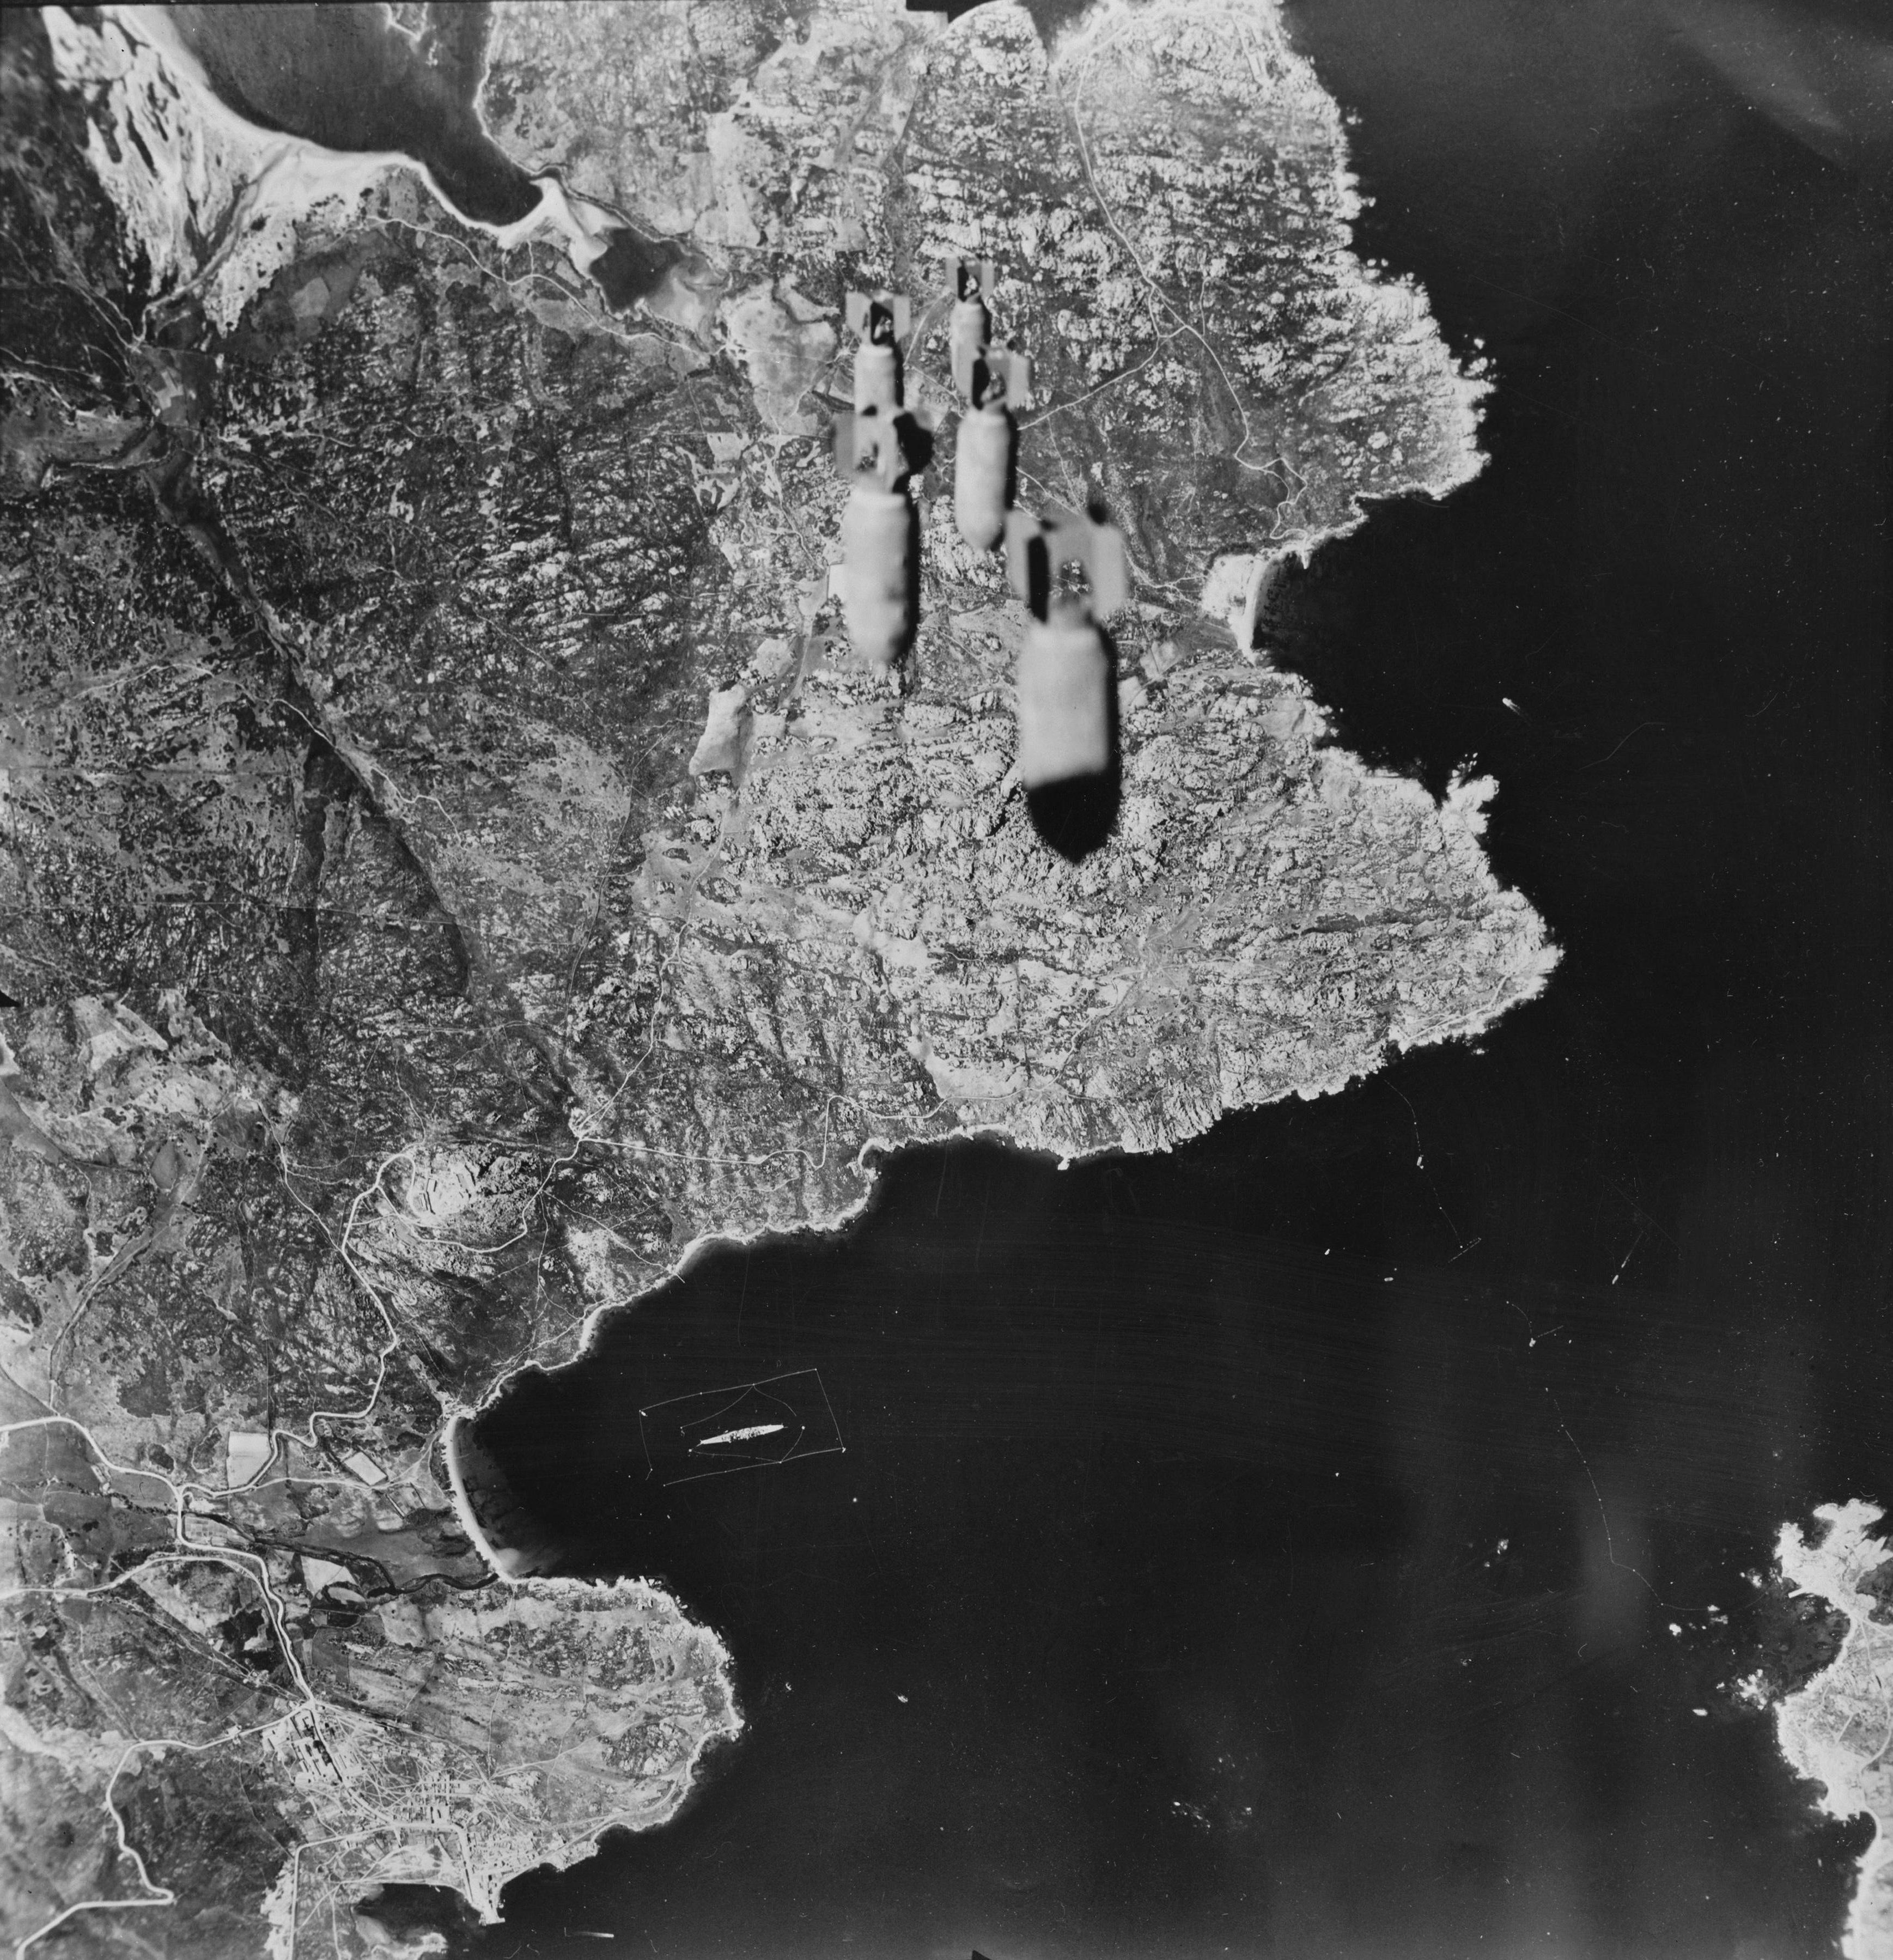 American bombs falling on the Italian cruiser Trieste, near Altura, Sardinia, Italy, 10 Apr 1943